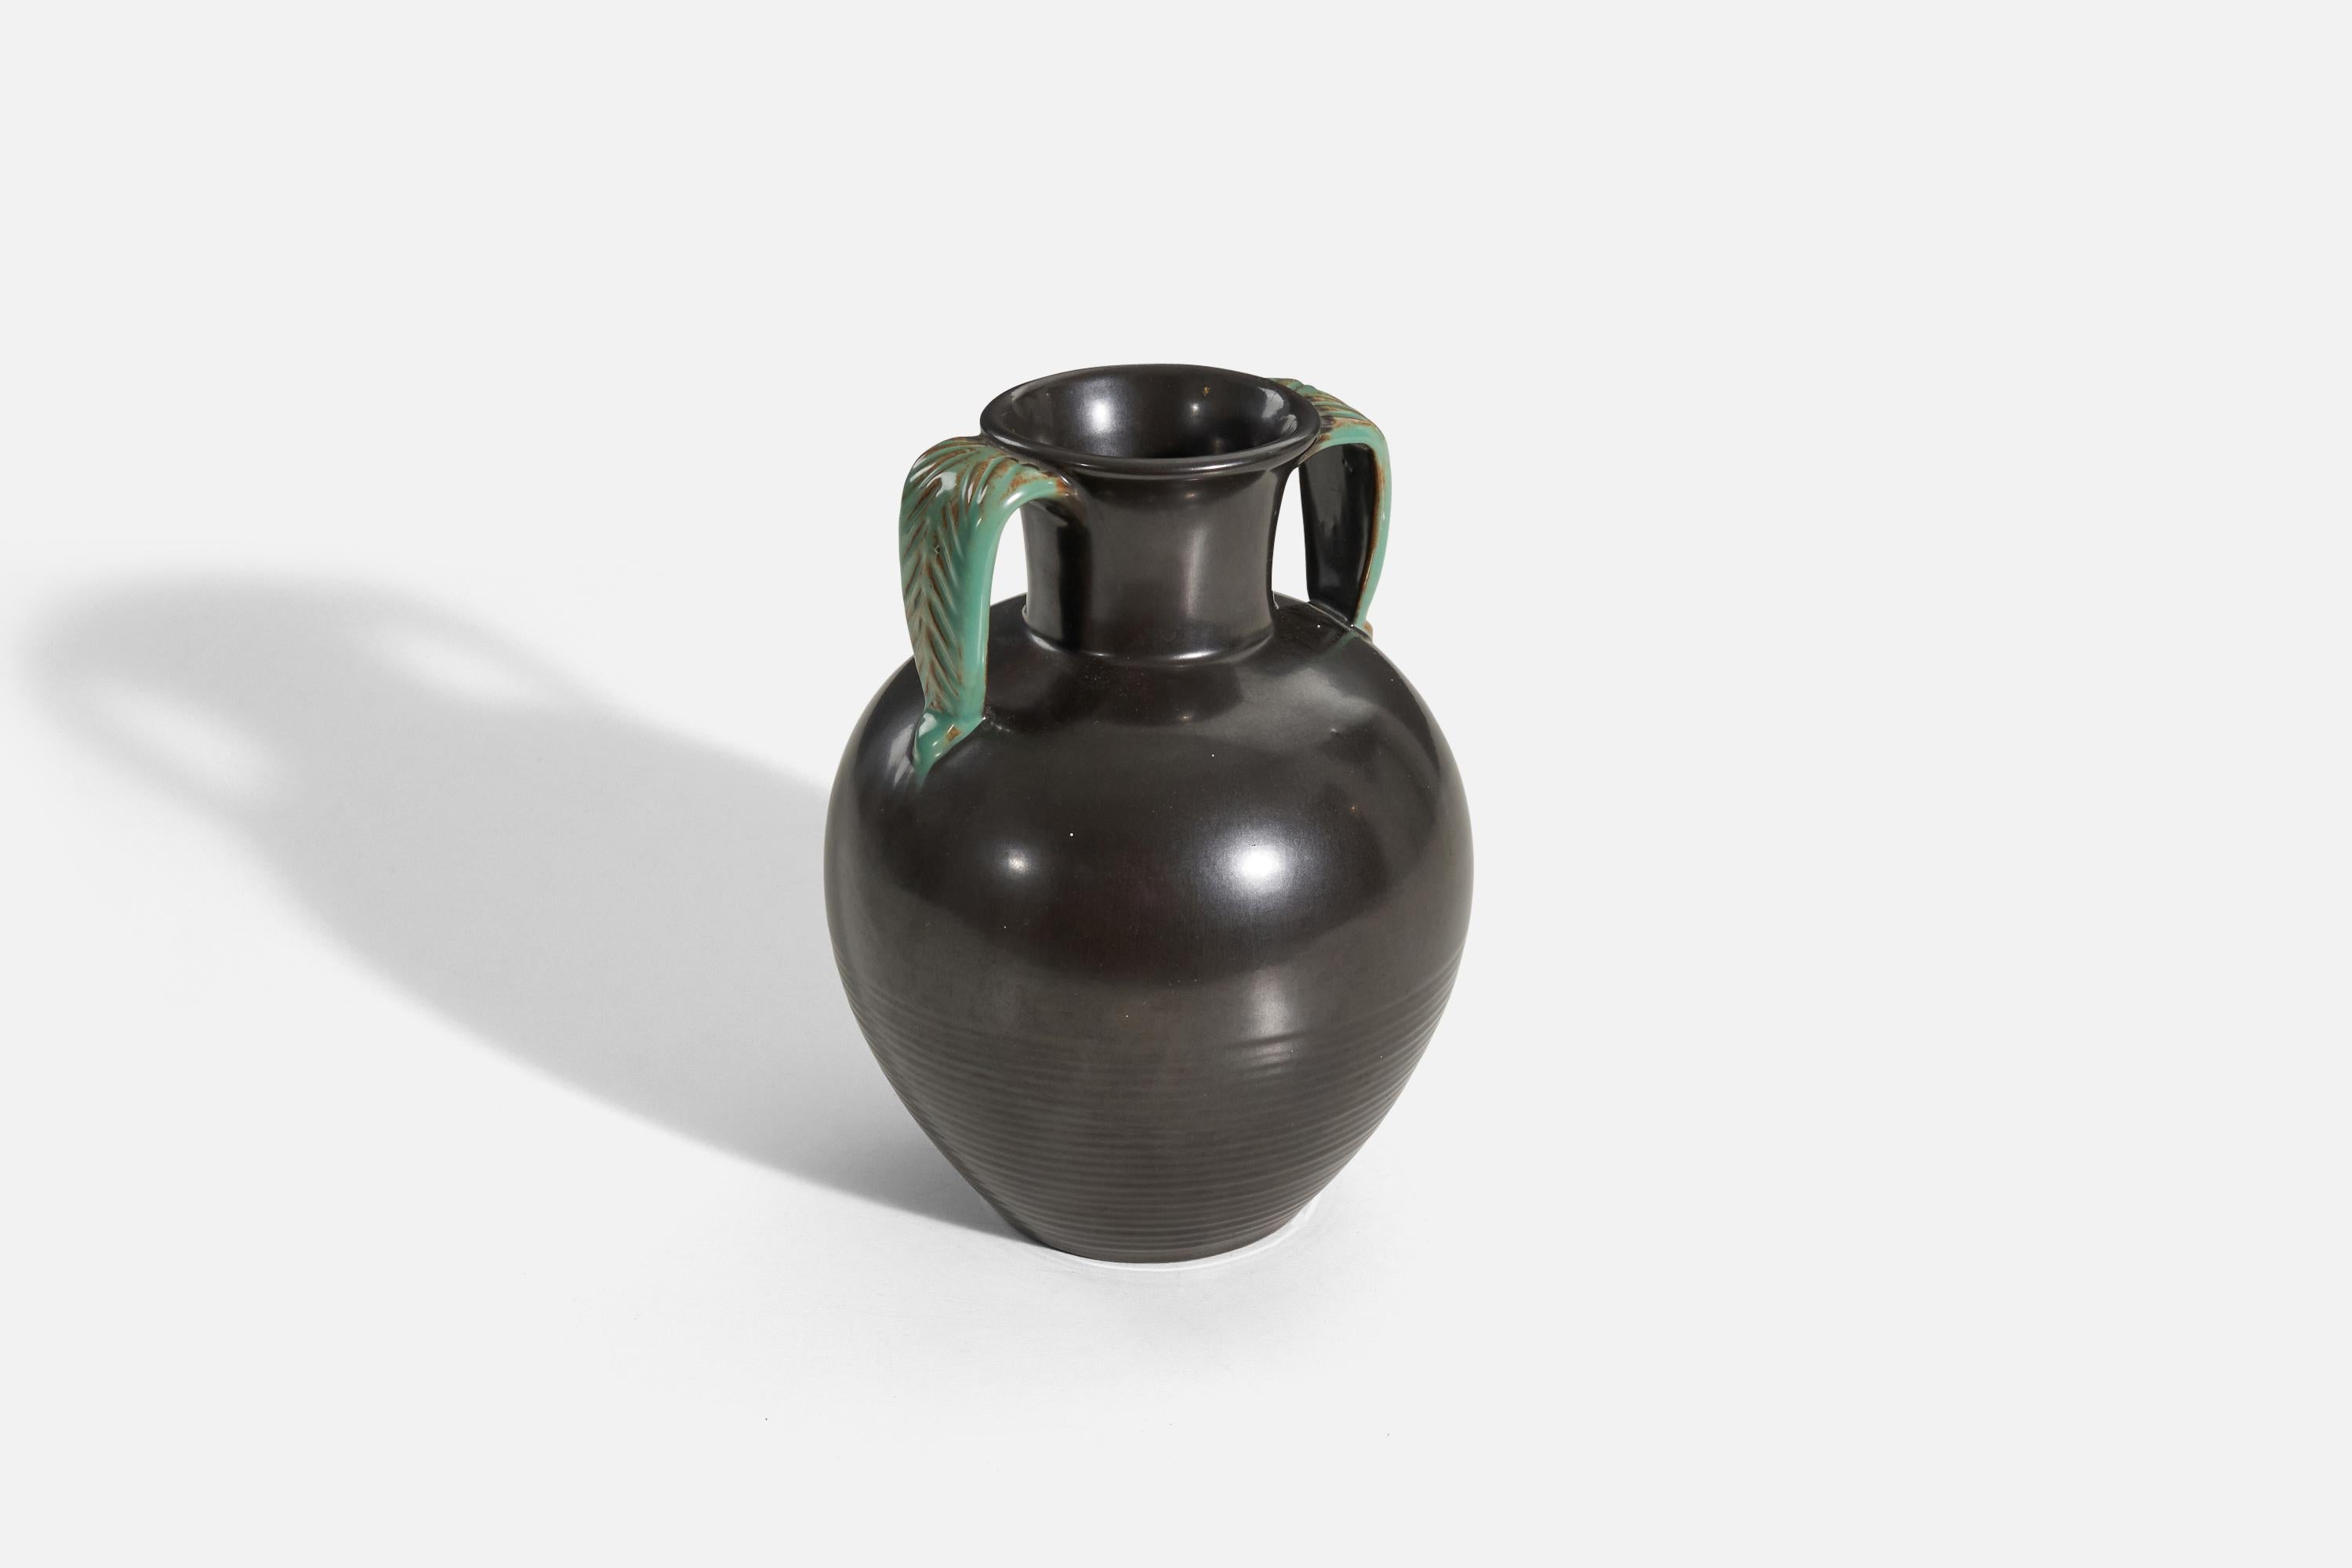 Scandinavian Modern Upsala-Ekeby, Vase, Black And Green-Glazed Earthenware, Sweden, 1940s For Sale